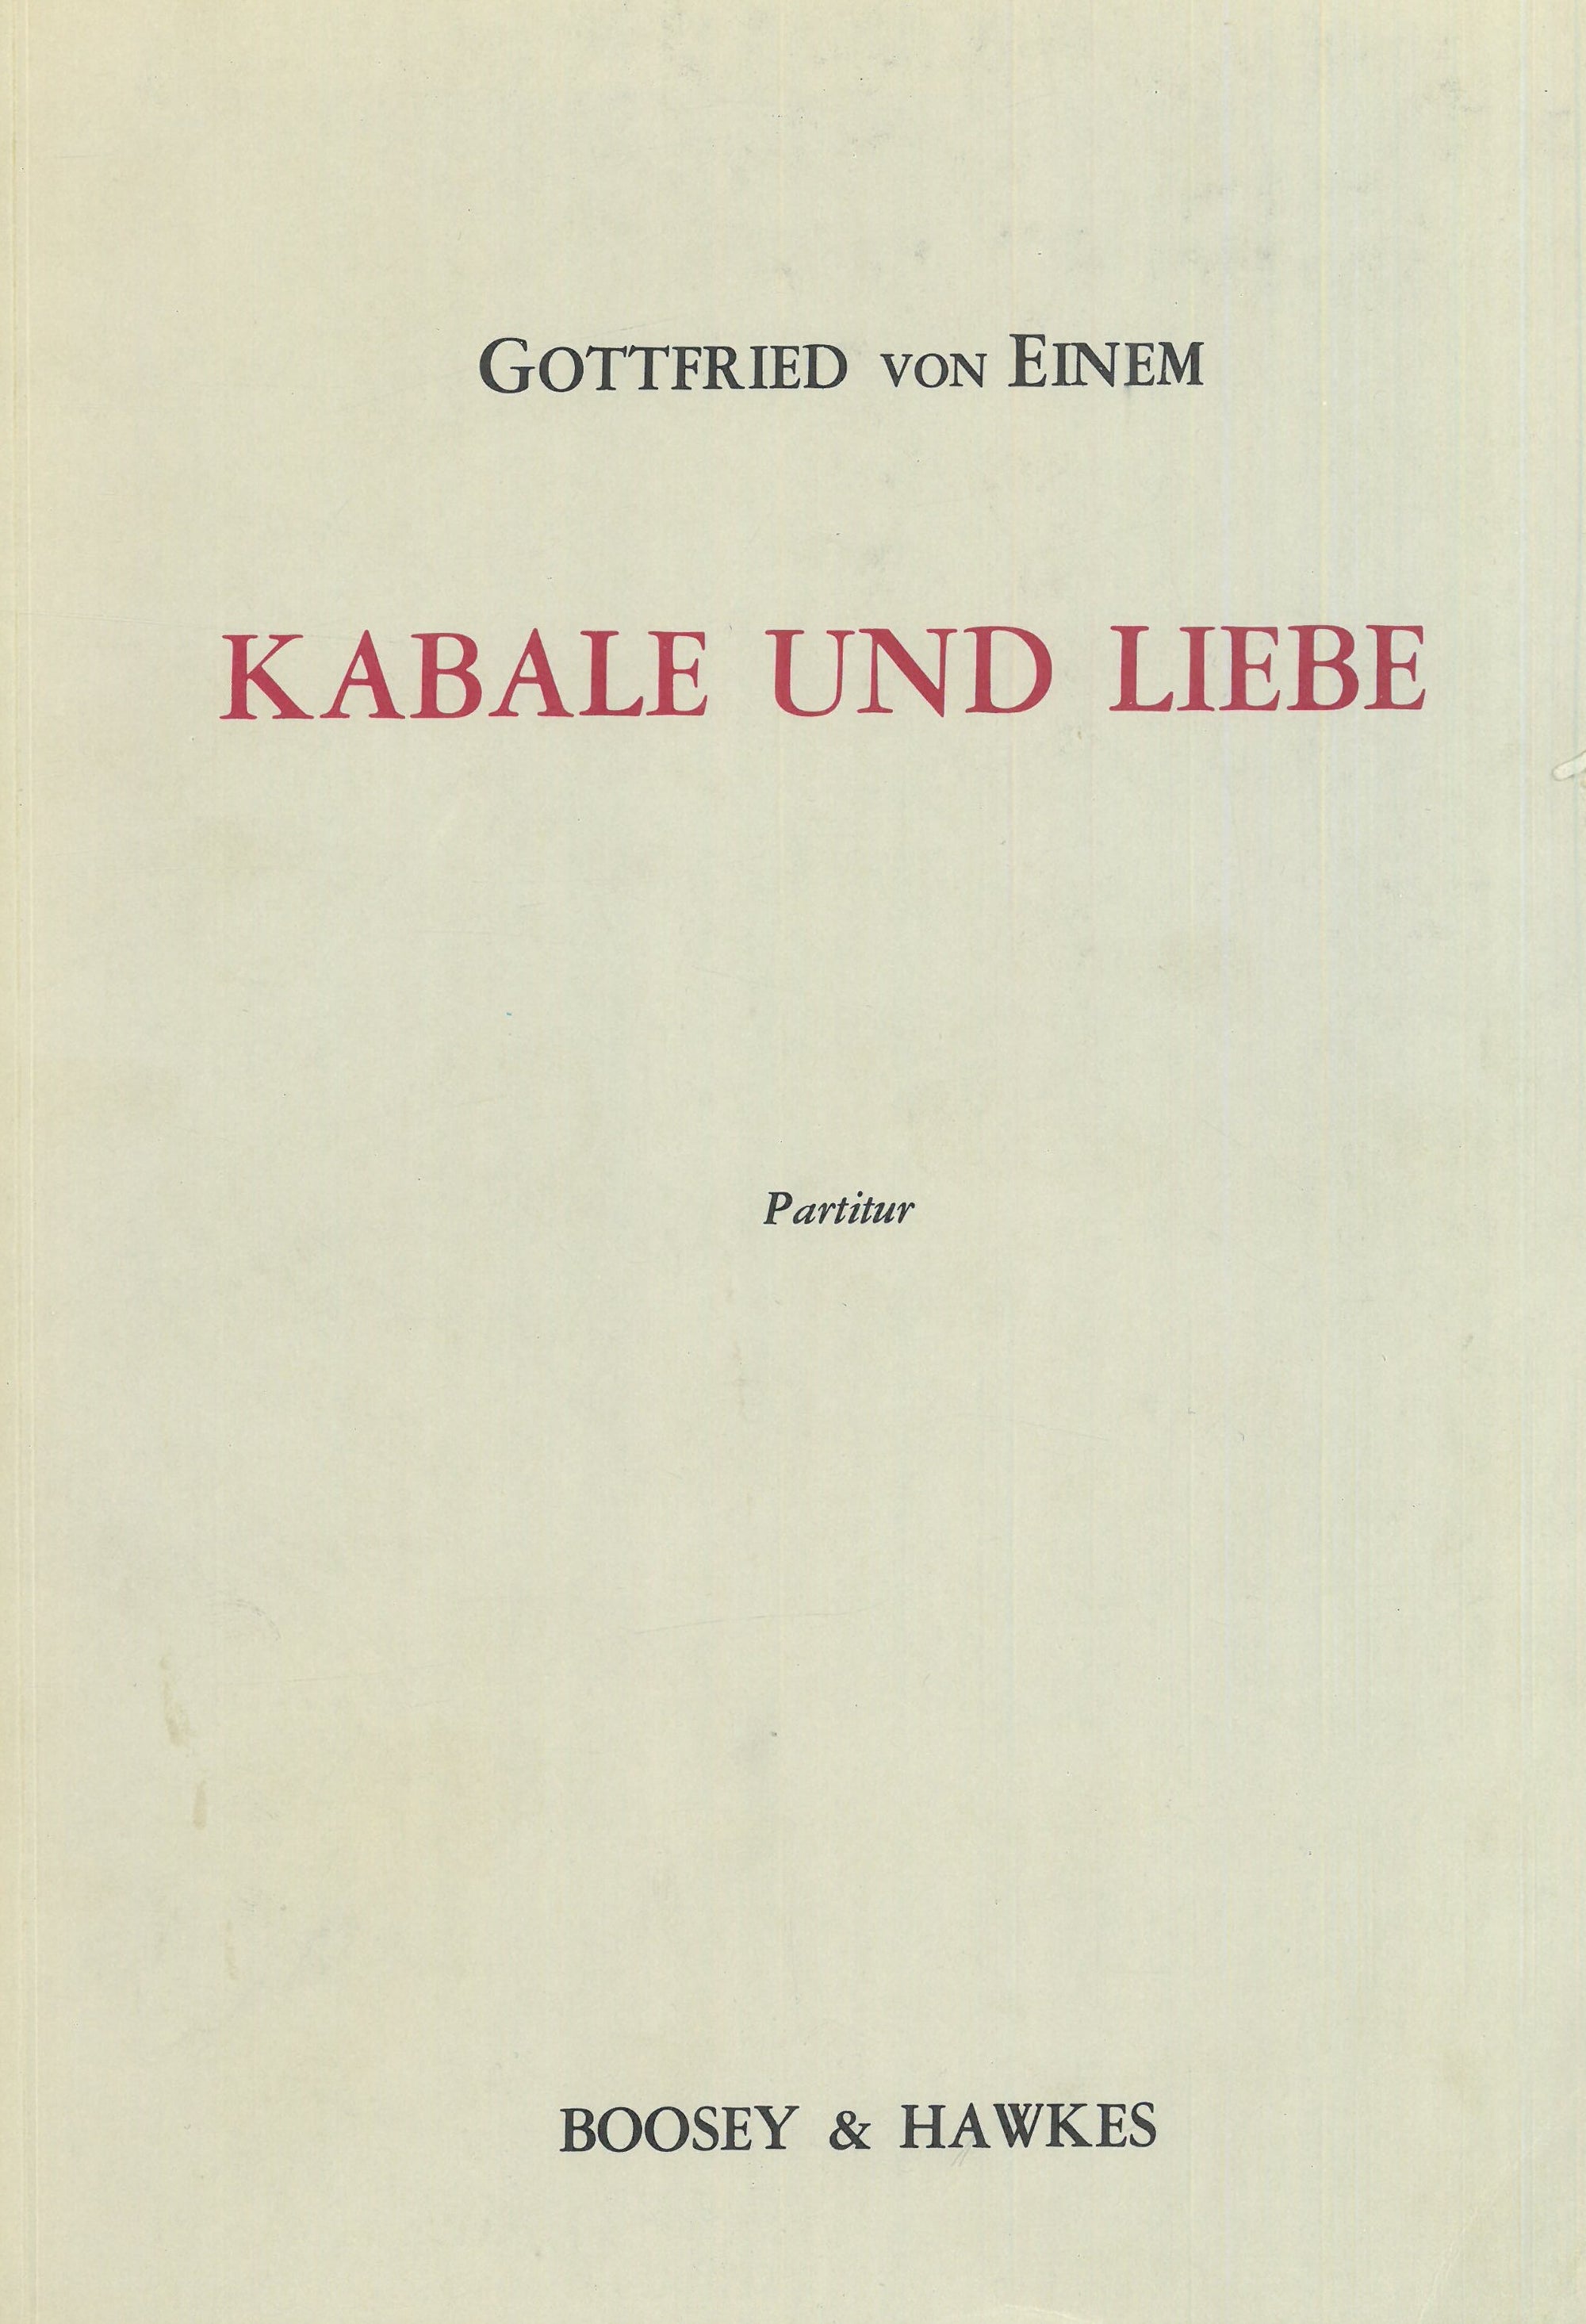 Einem: Kabale and Liebe, Op. 44